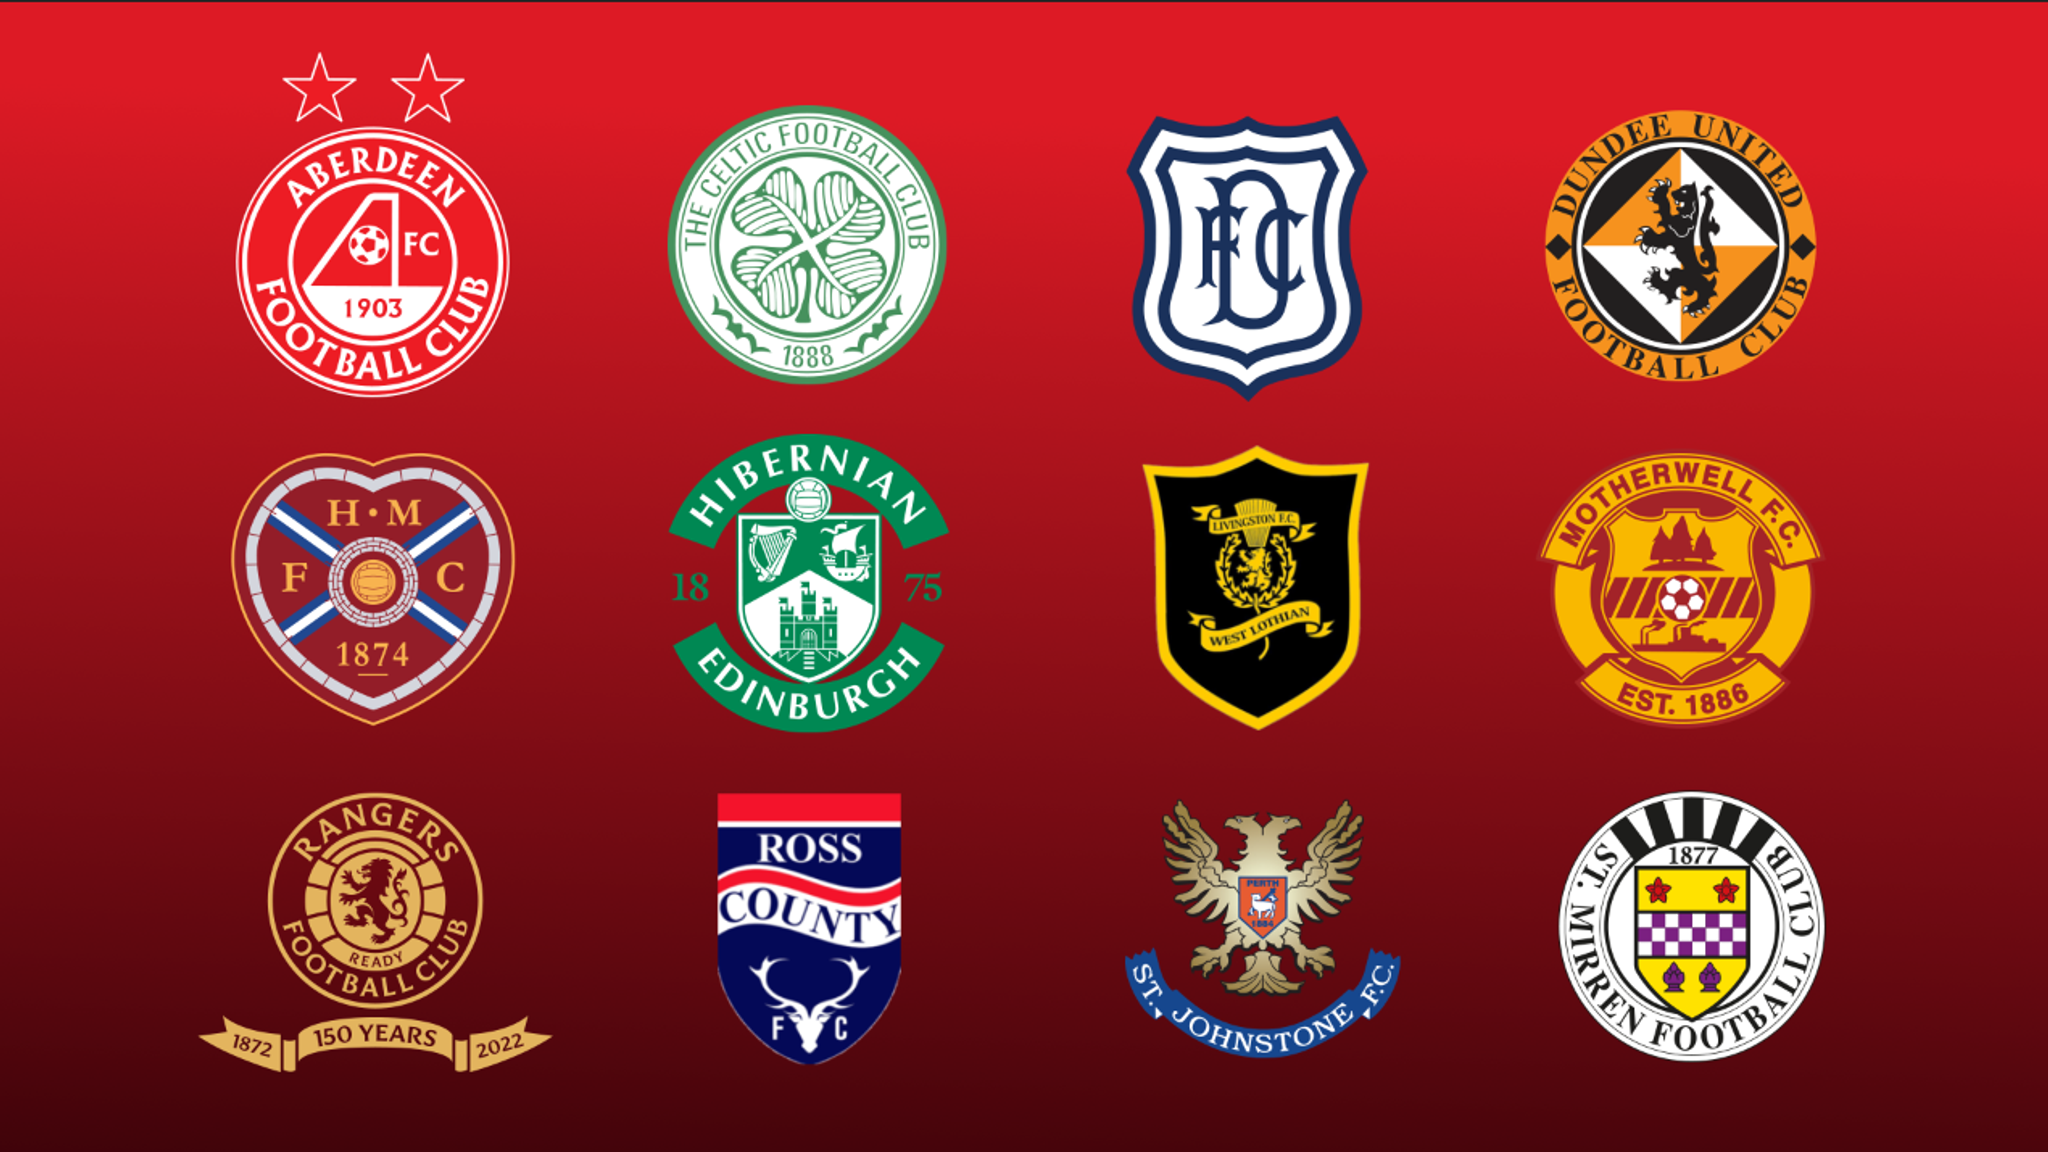 FC'12 Scotland – Ladbrokes Championship 2017/18